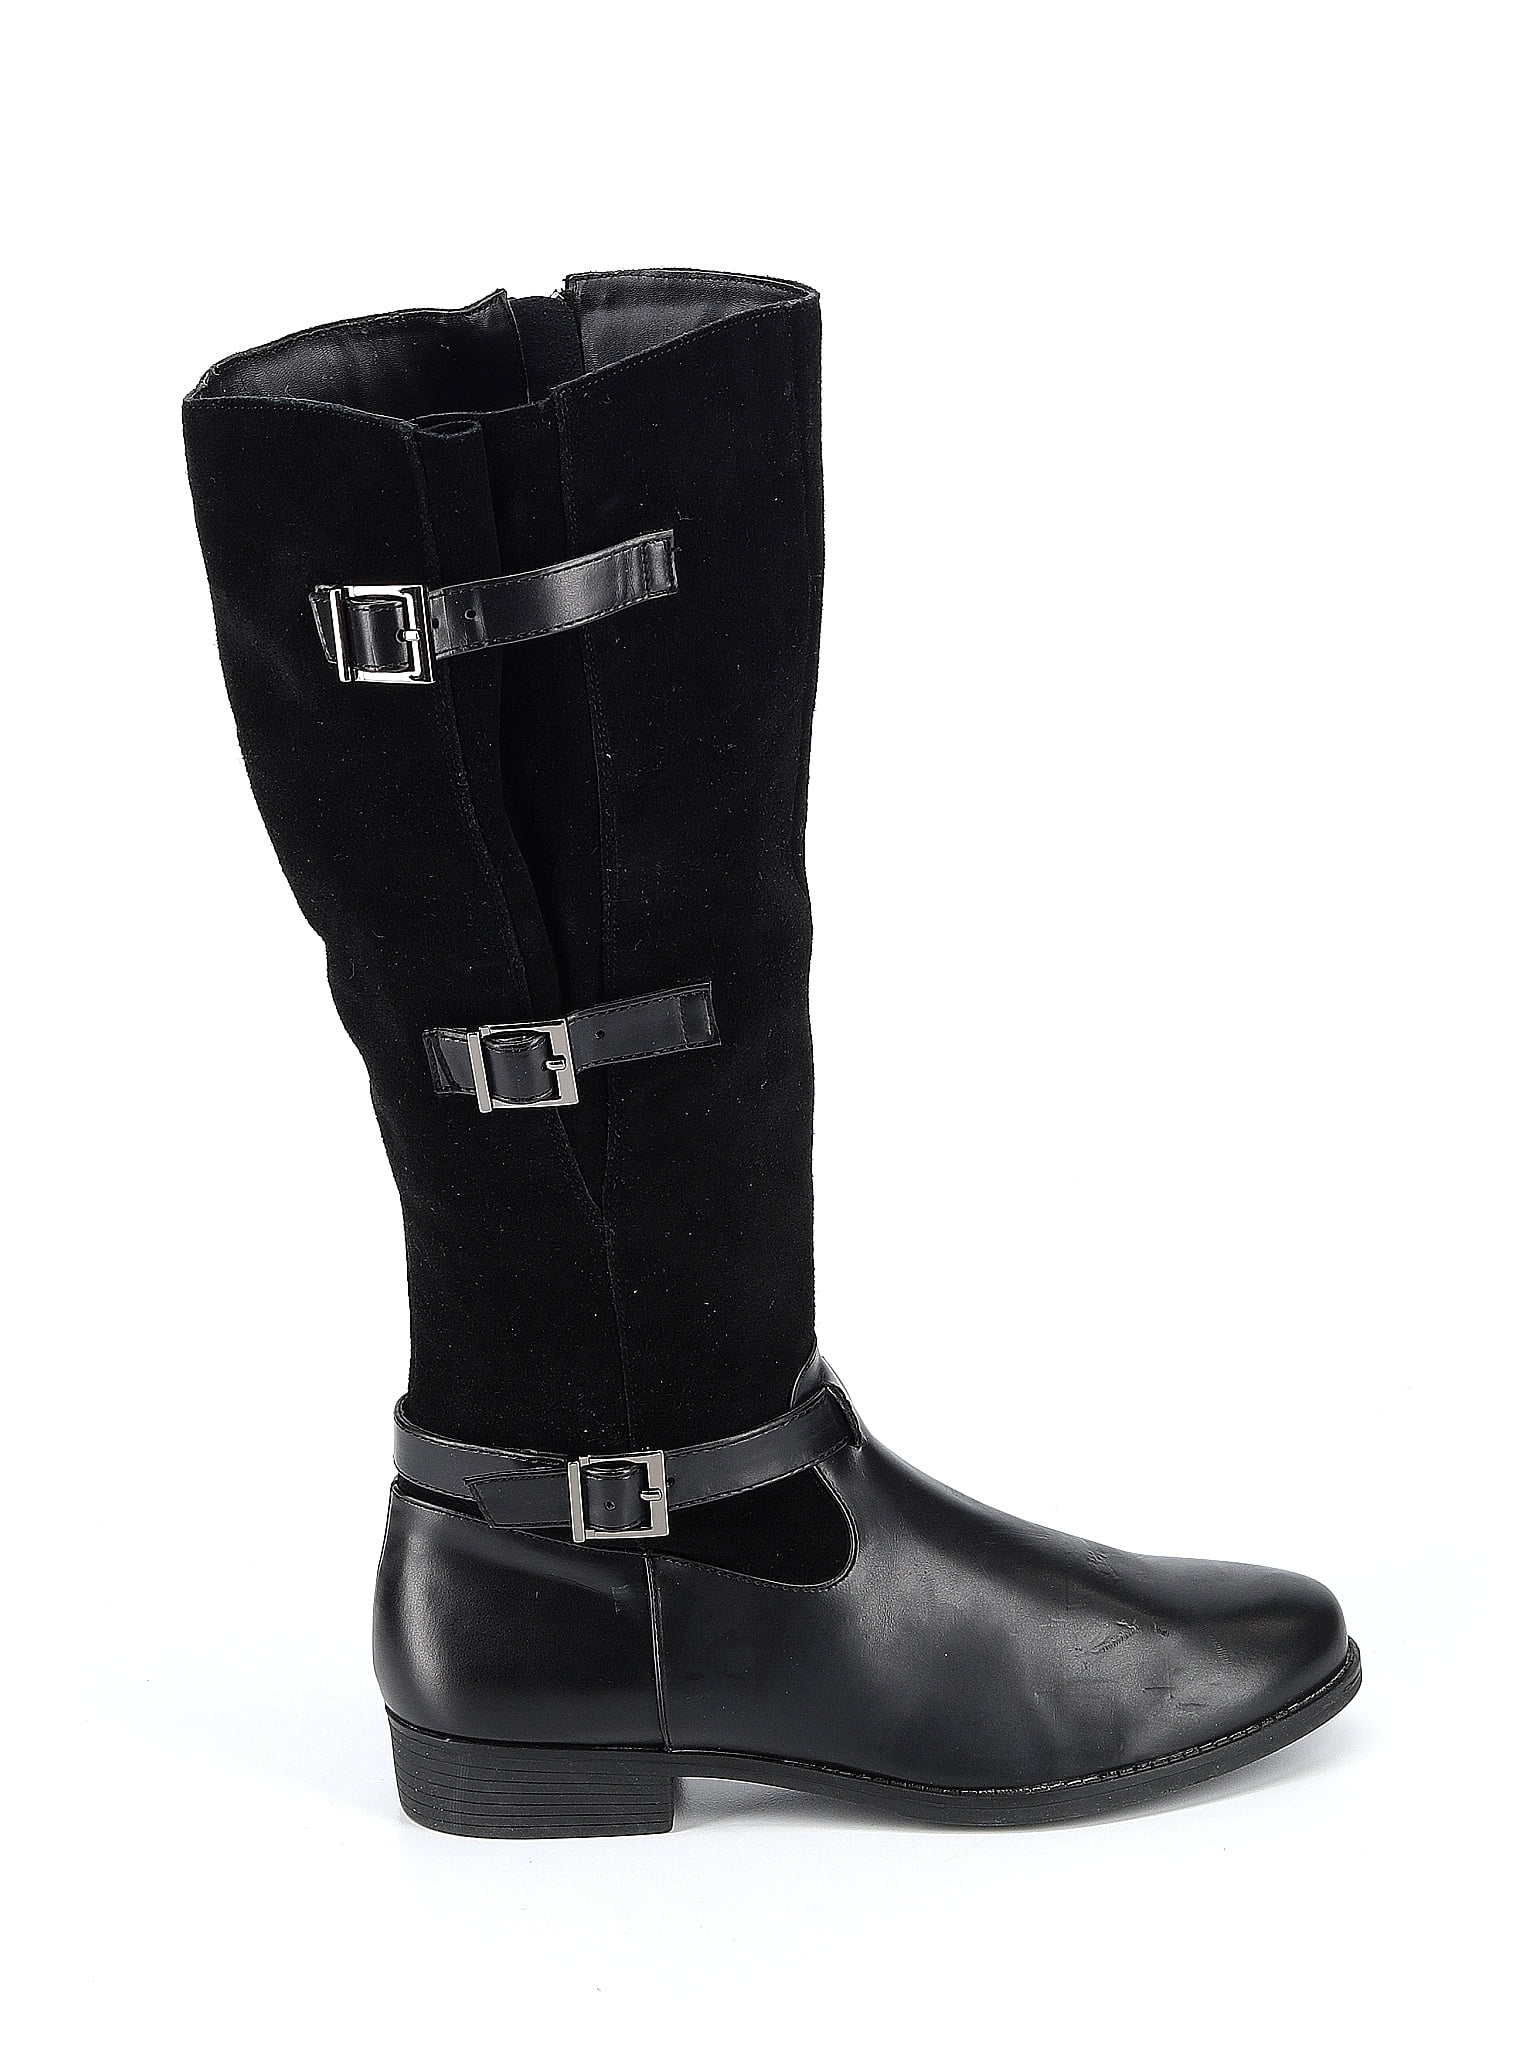 Matisse Black Boots Size 8 1/2 - 61% off | thredUP